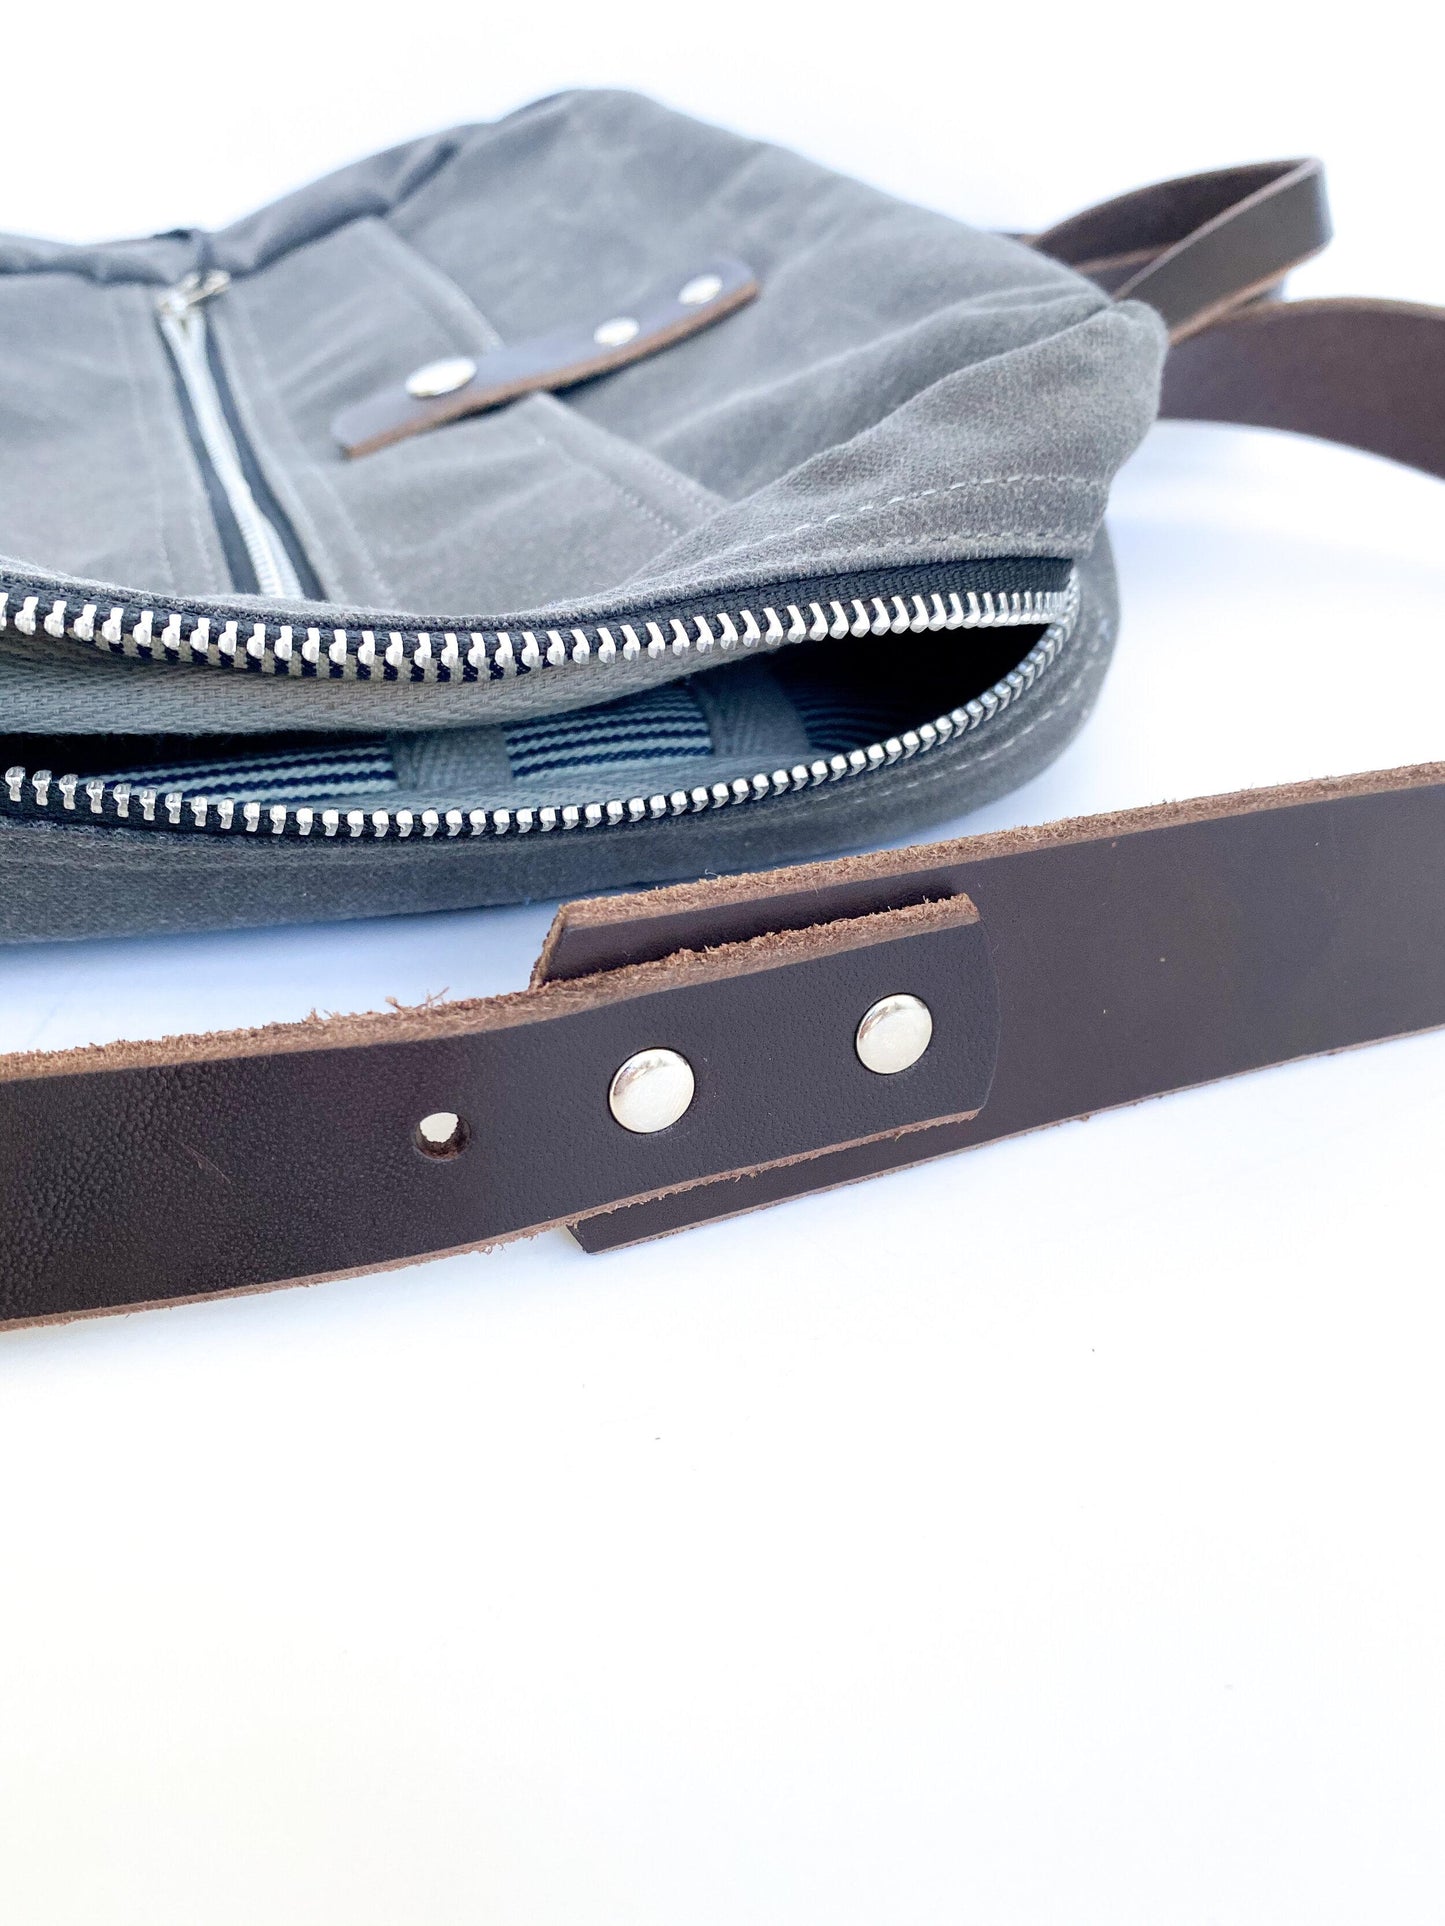 Backpack, zipper, strap & hardware detail.